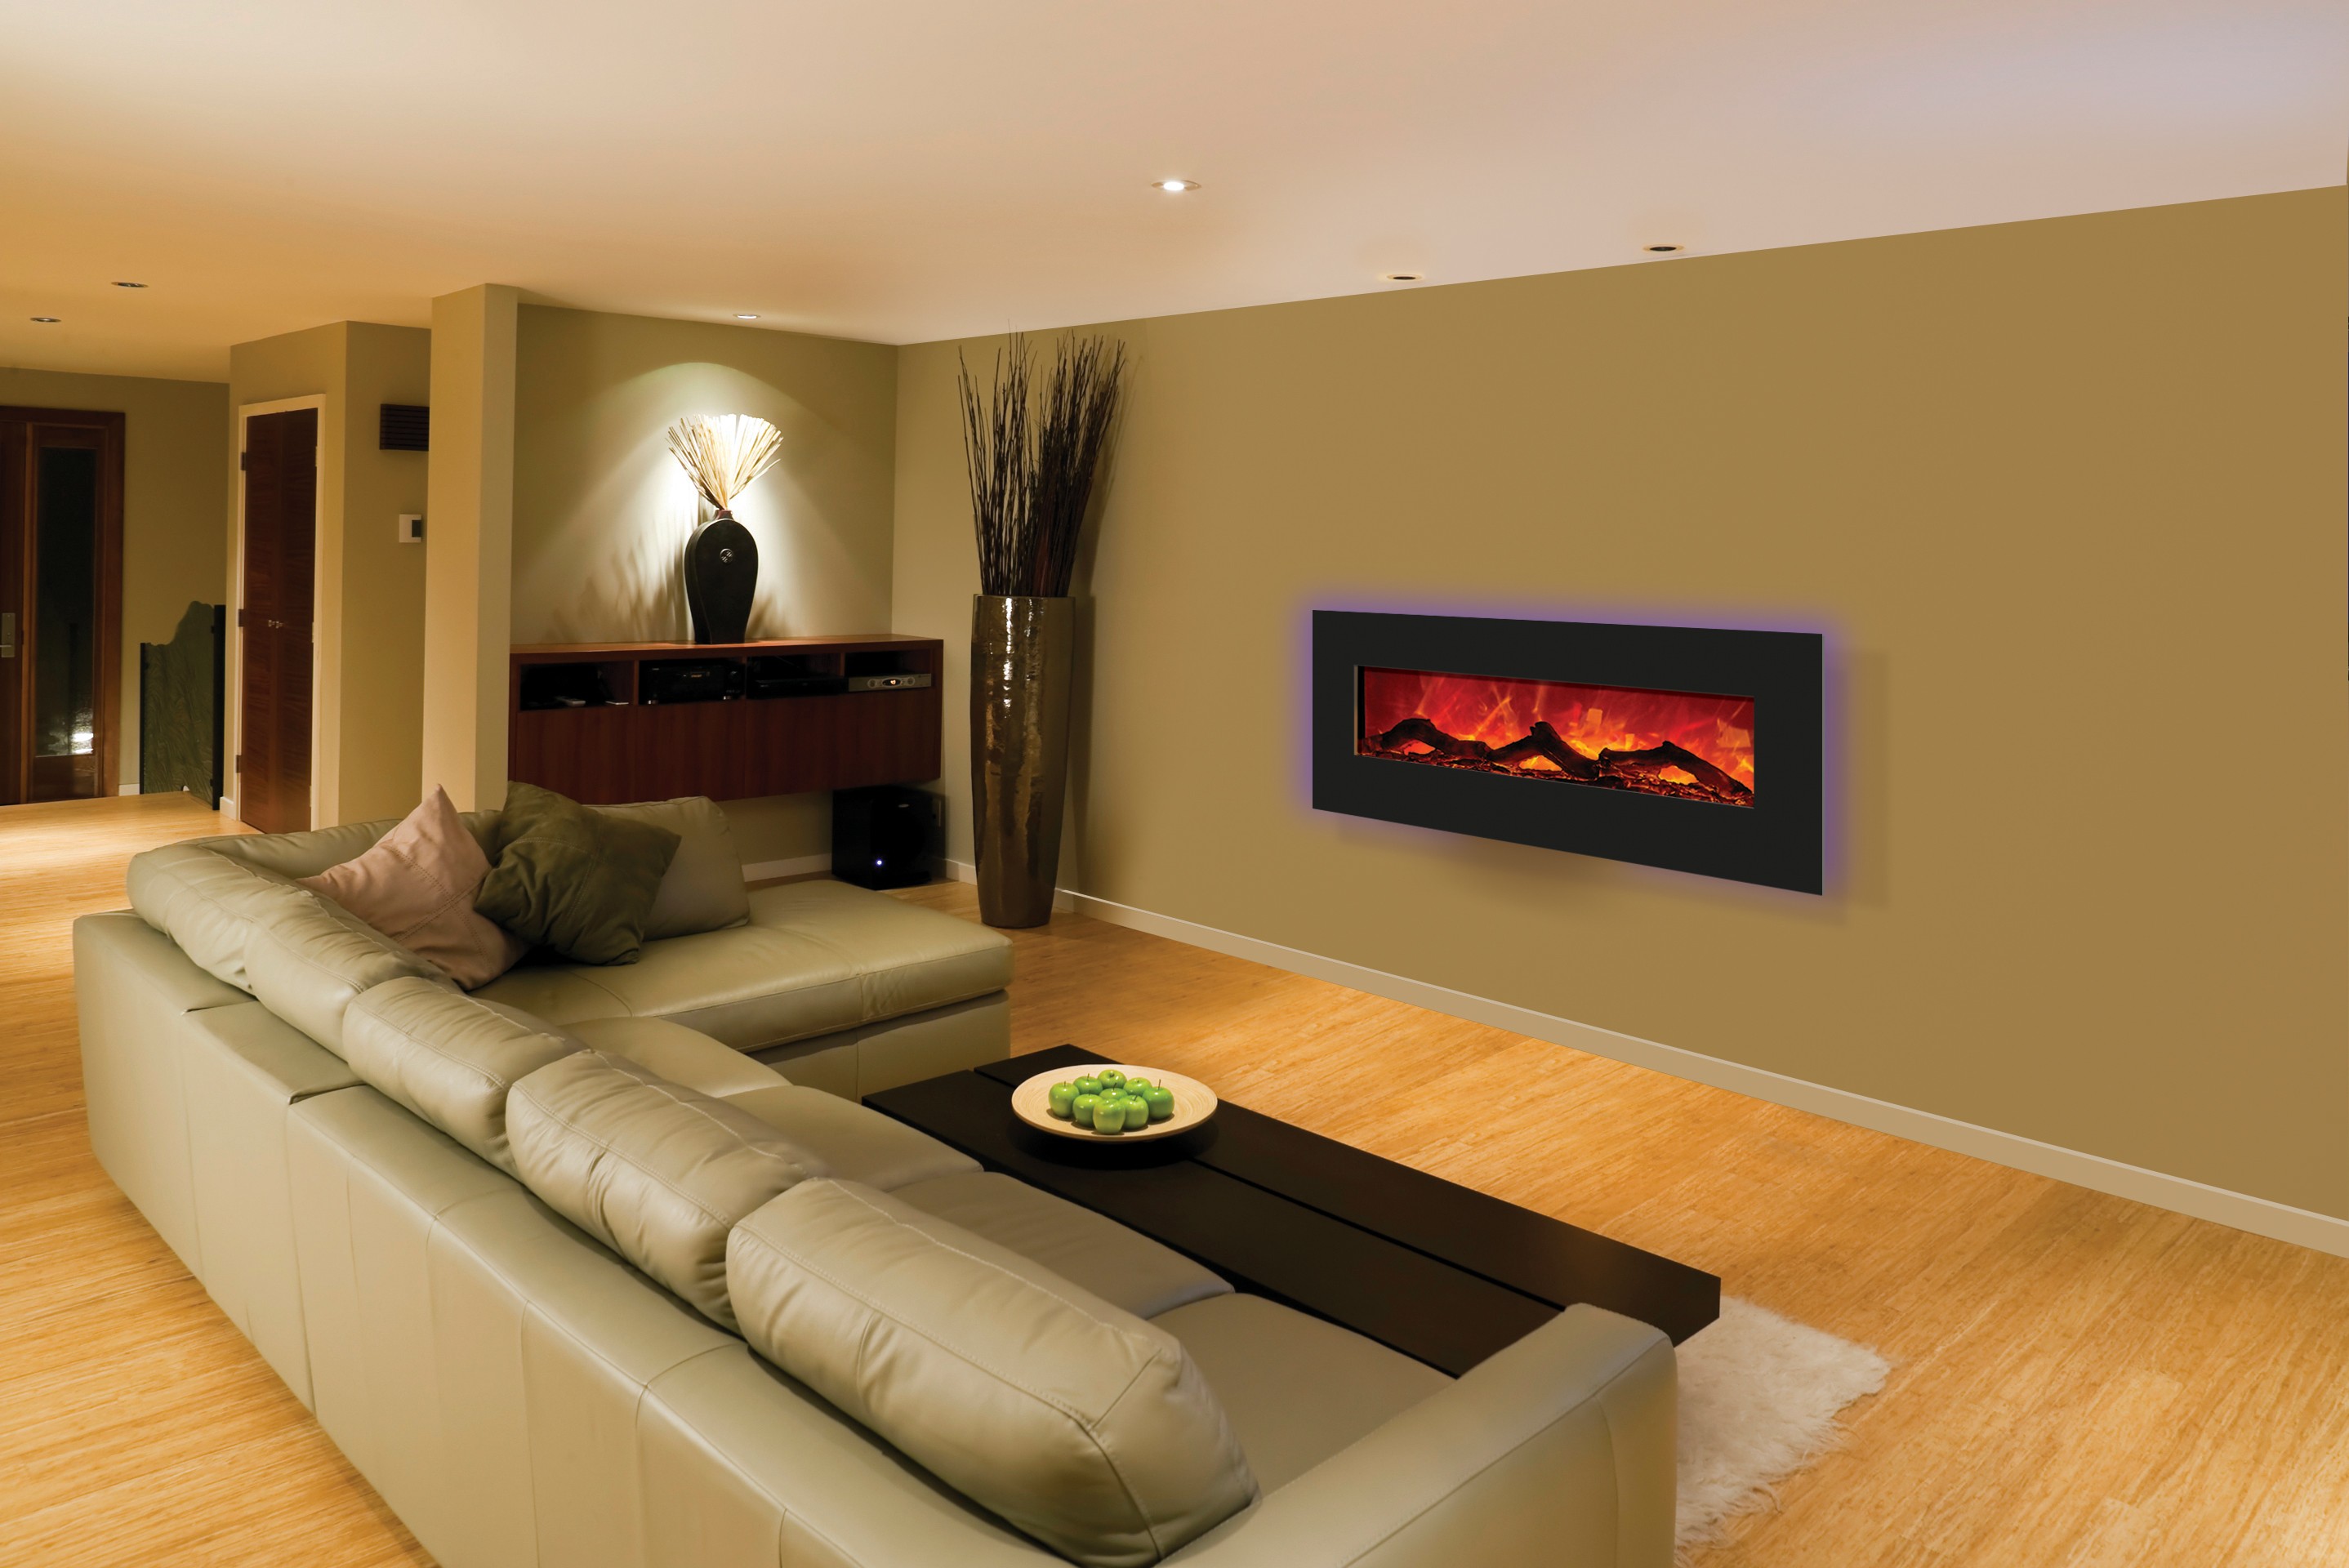 Stone Fireplace Decor Luxury Cool Electric Fireplace Ideas Fireplace Design Ideas